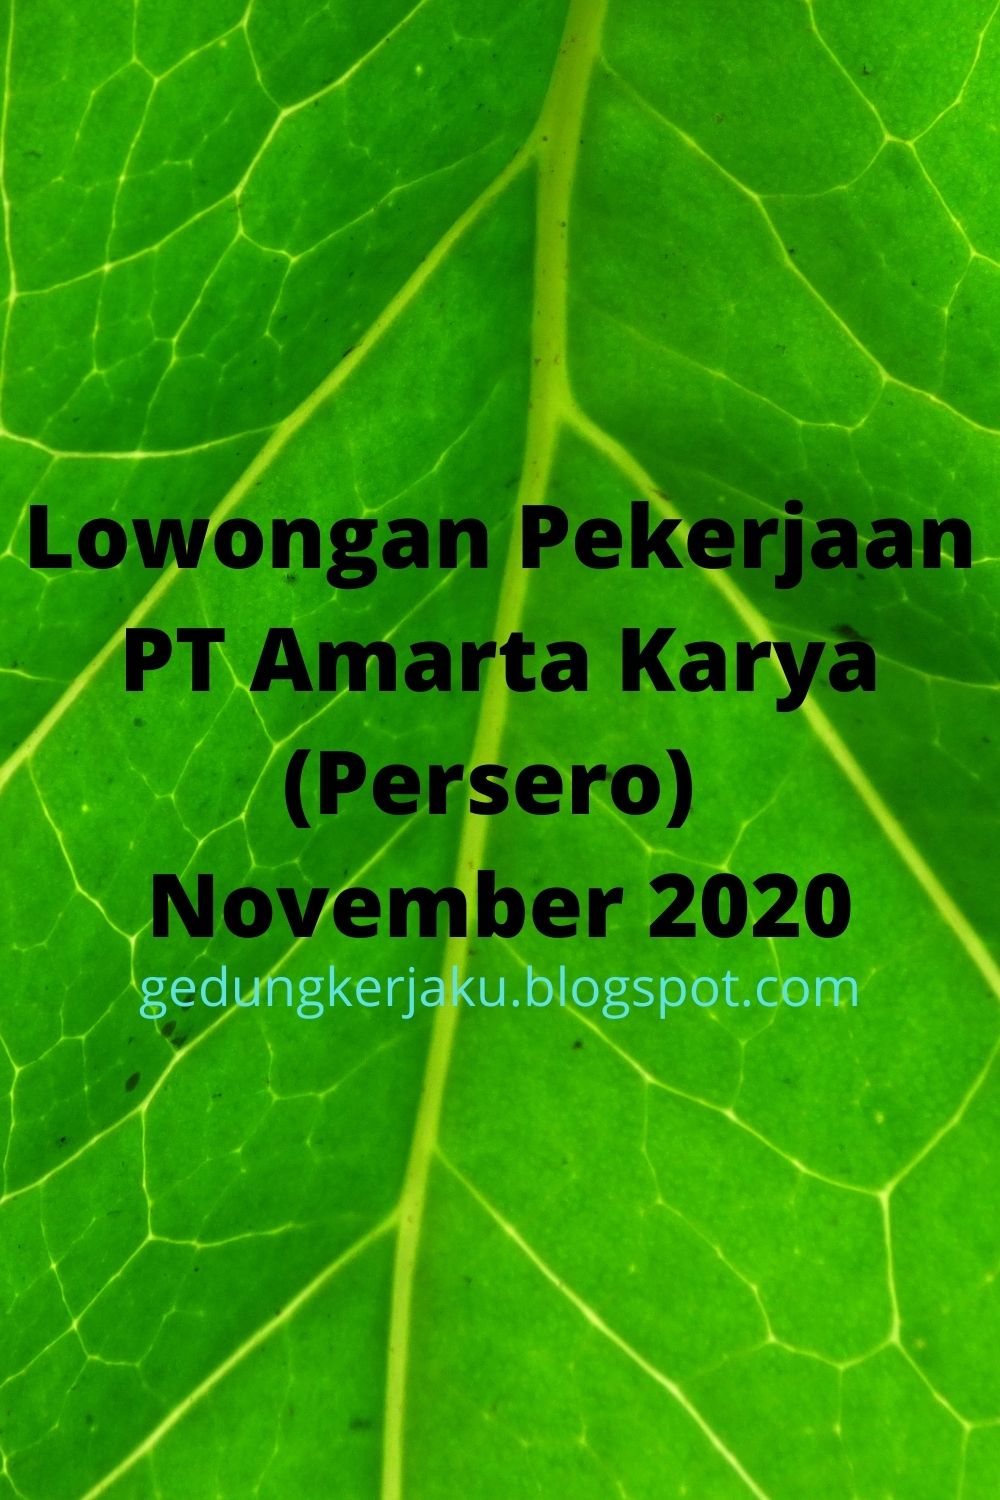 Lowongan Pekerjaan PT Amarta Karya (Persero) November 2020